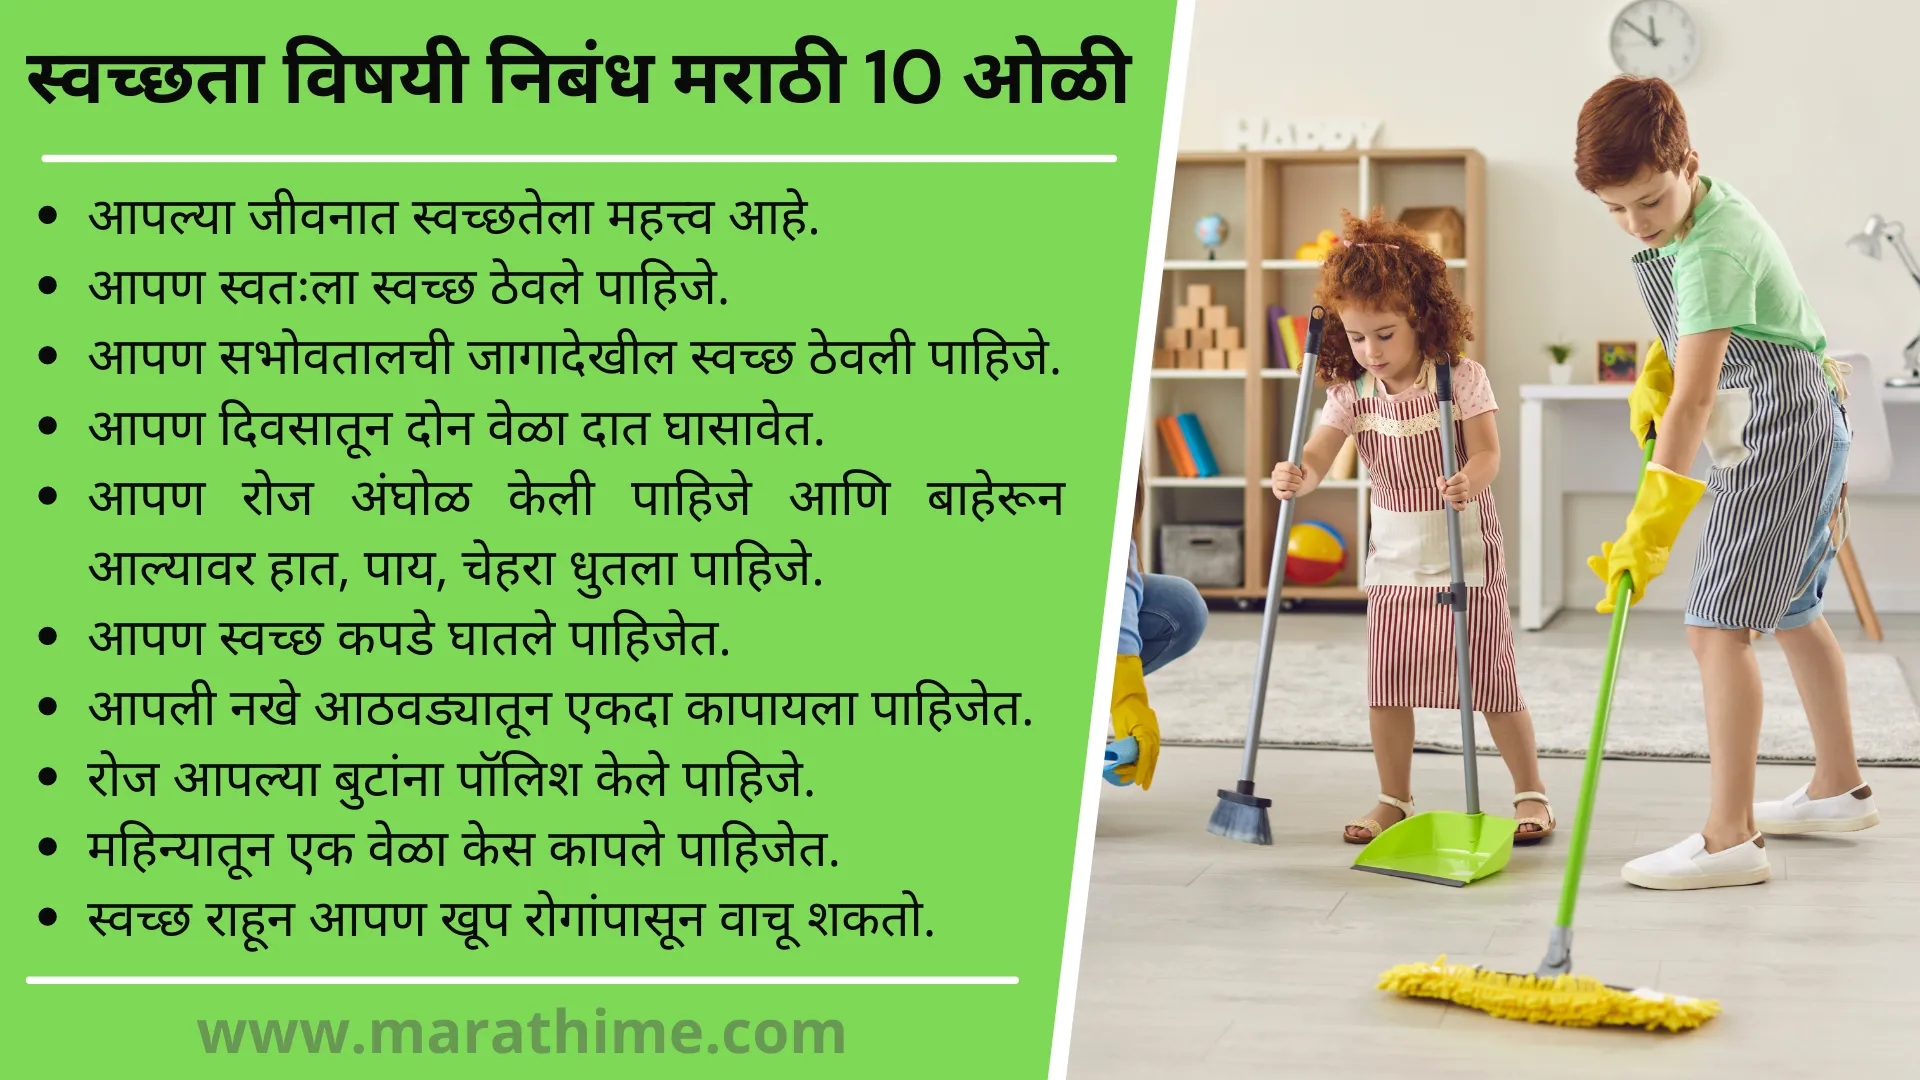 स्वच्छता विषयी निबंध मराठी 10 ओळी-10 Lines on Cleanliness in Marathi